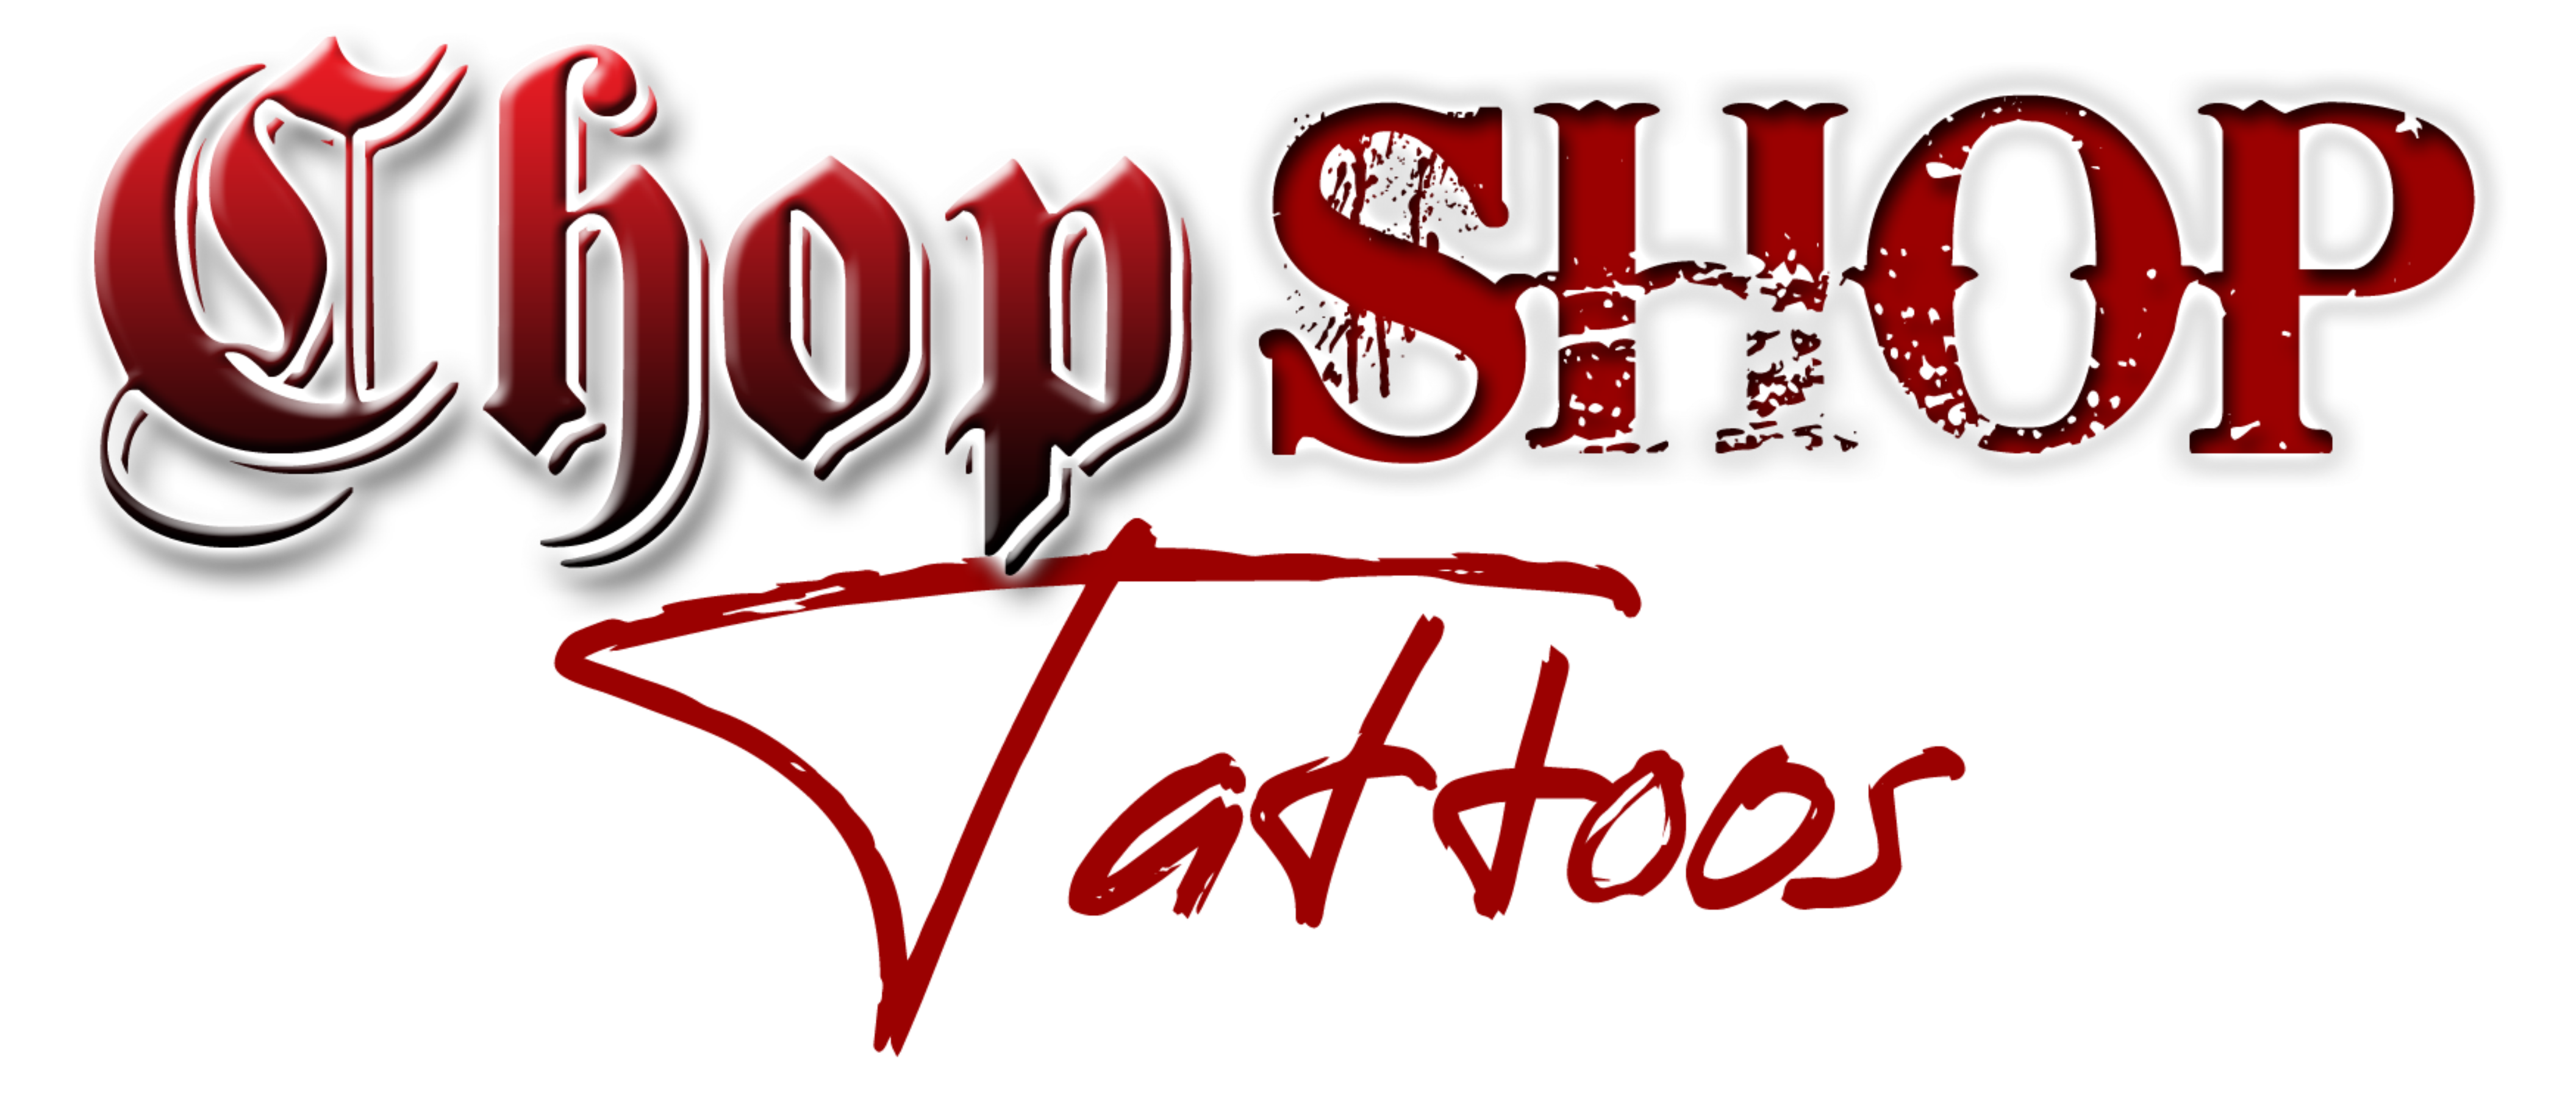 Chop shop logo